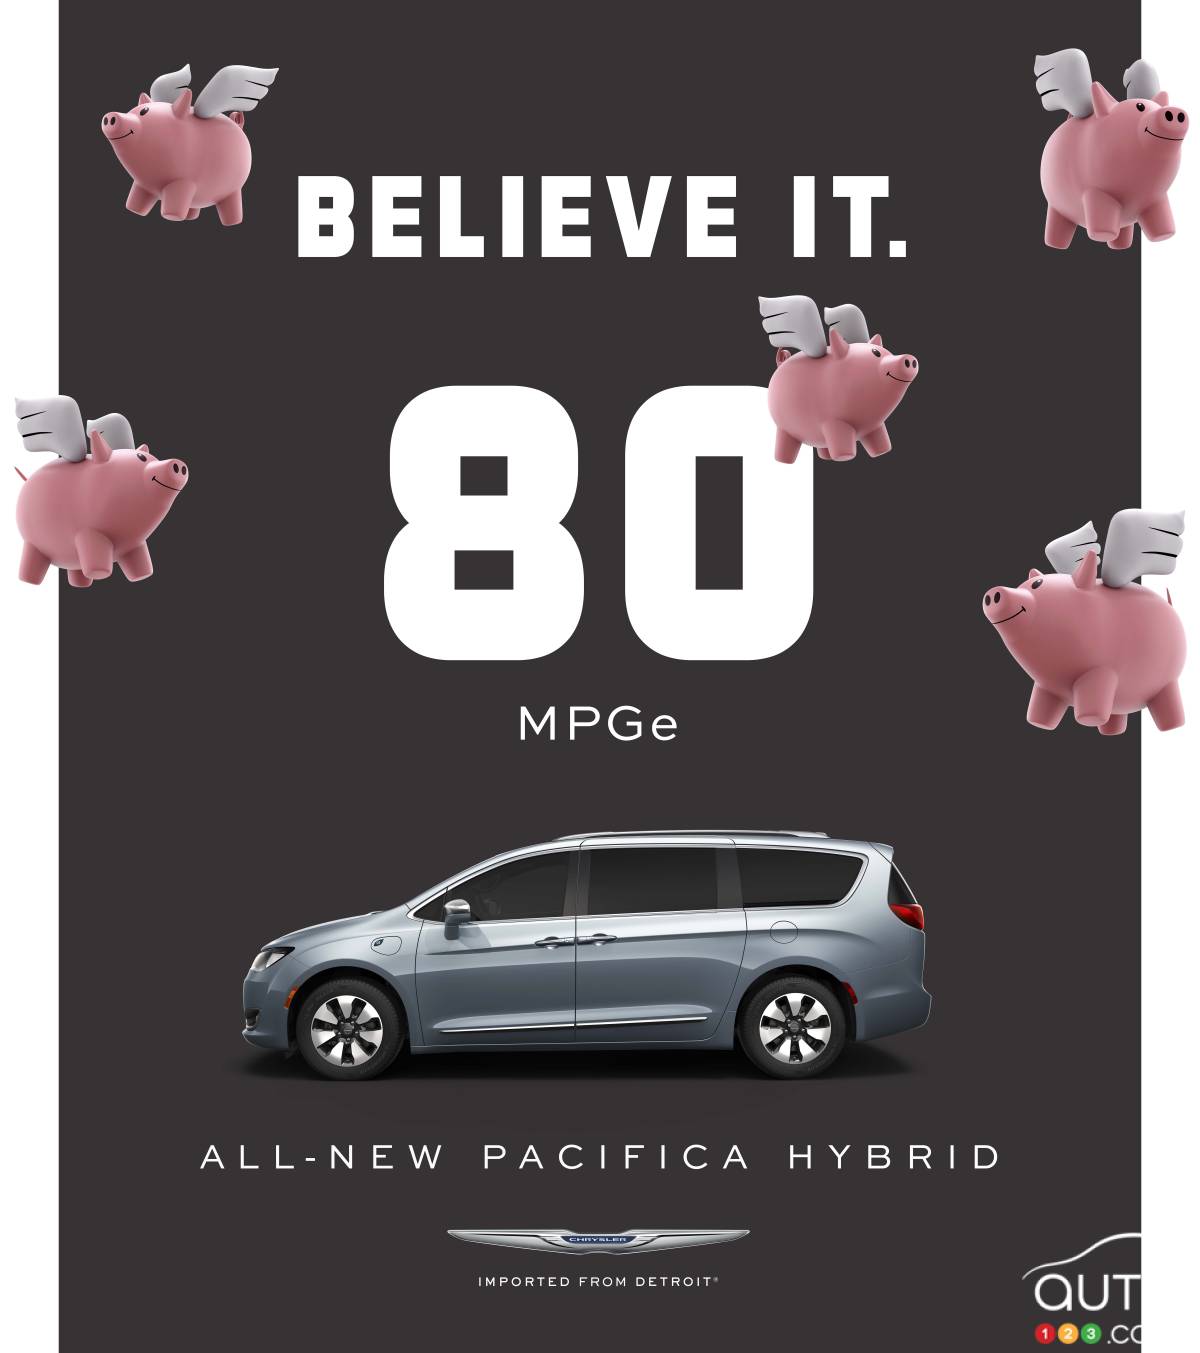 La Chrysler Pacifica hybride 2017 arrive!